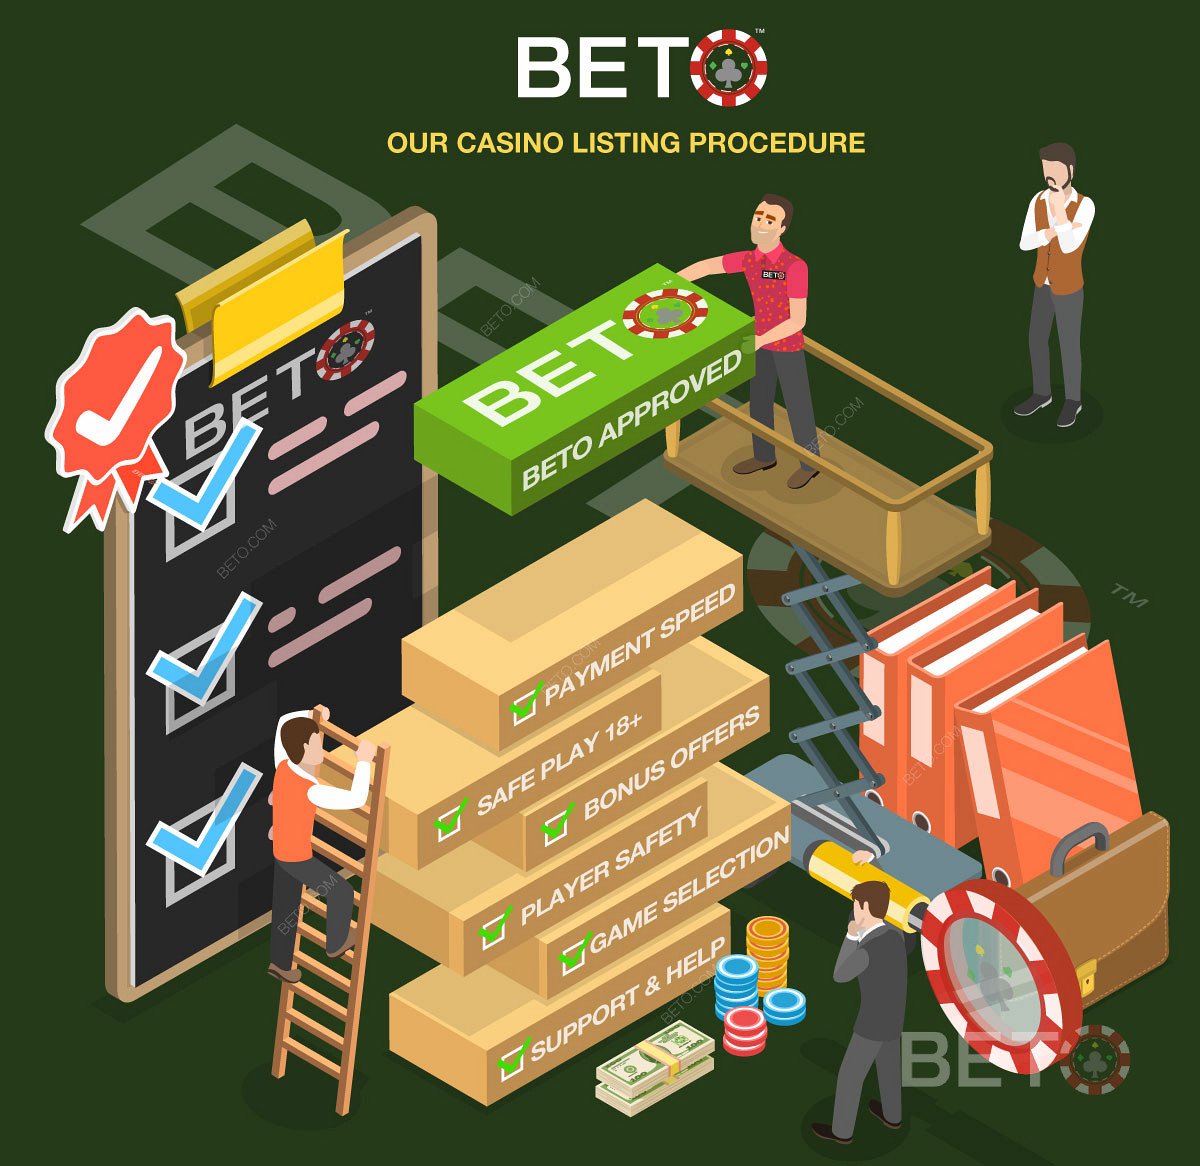 Der detaillierte Casino Review Prozess auf BETO.com